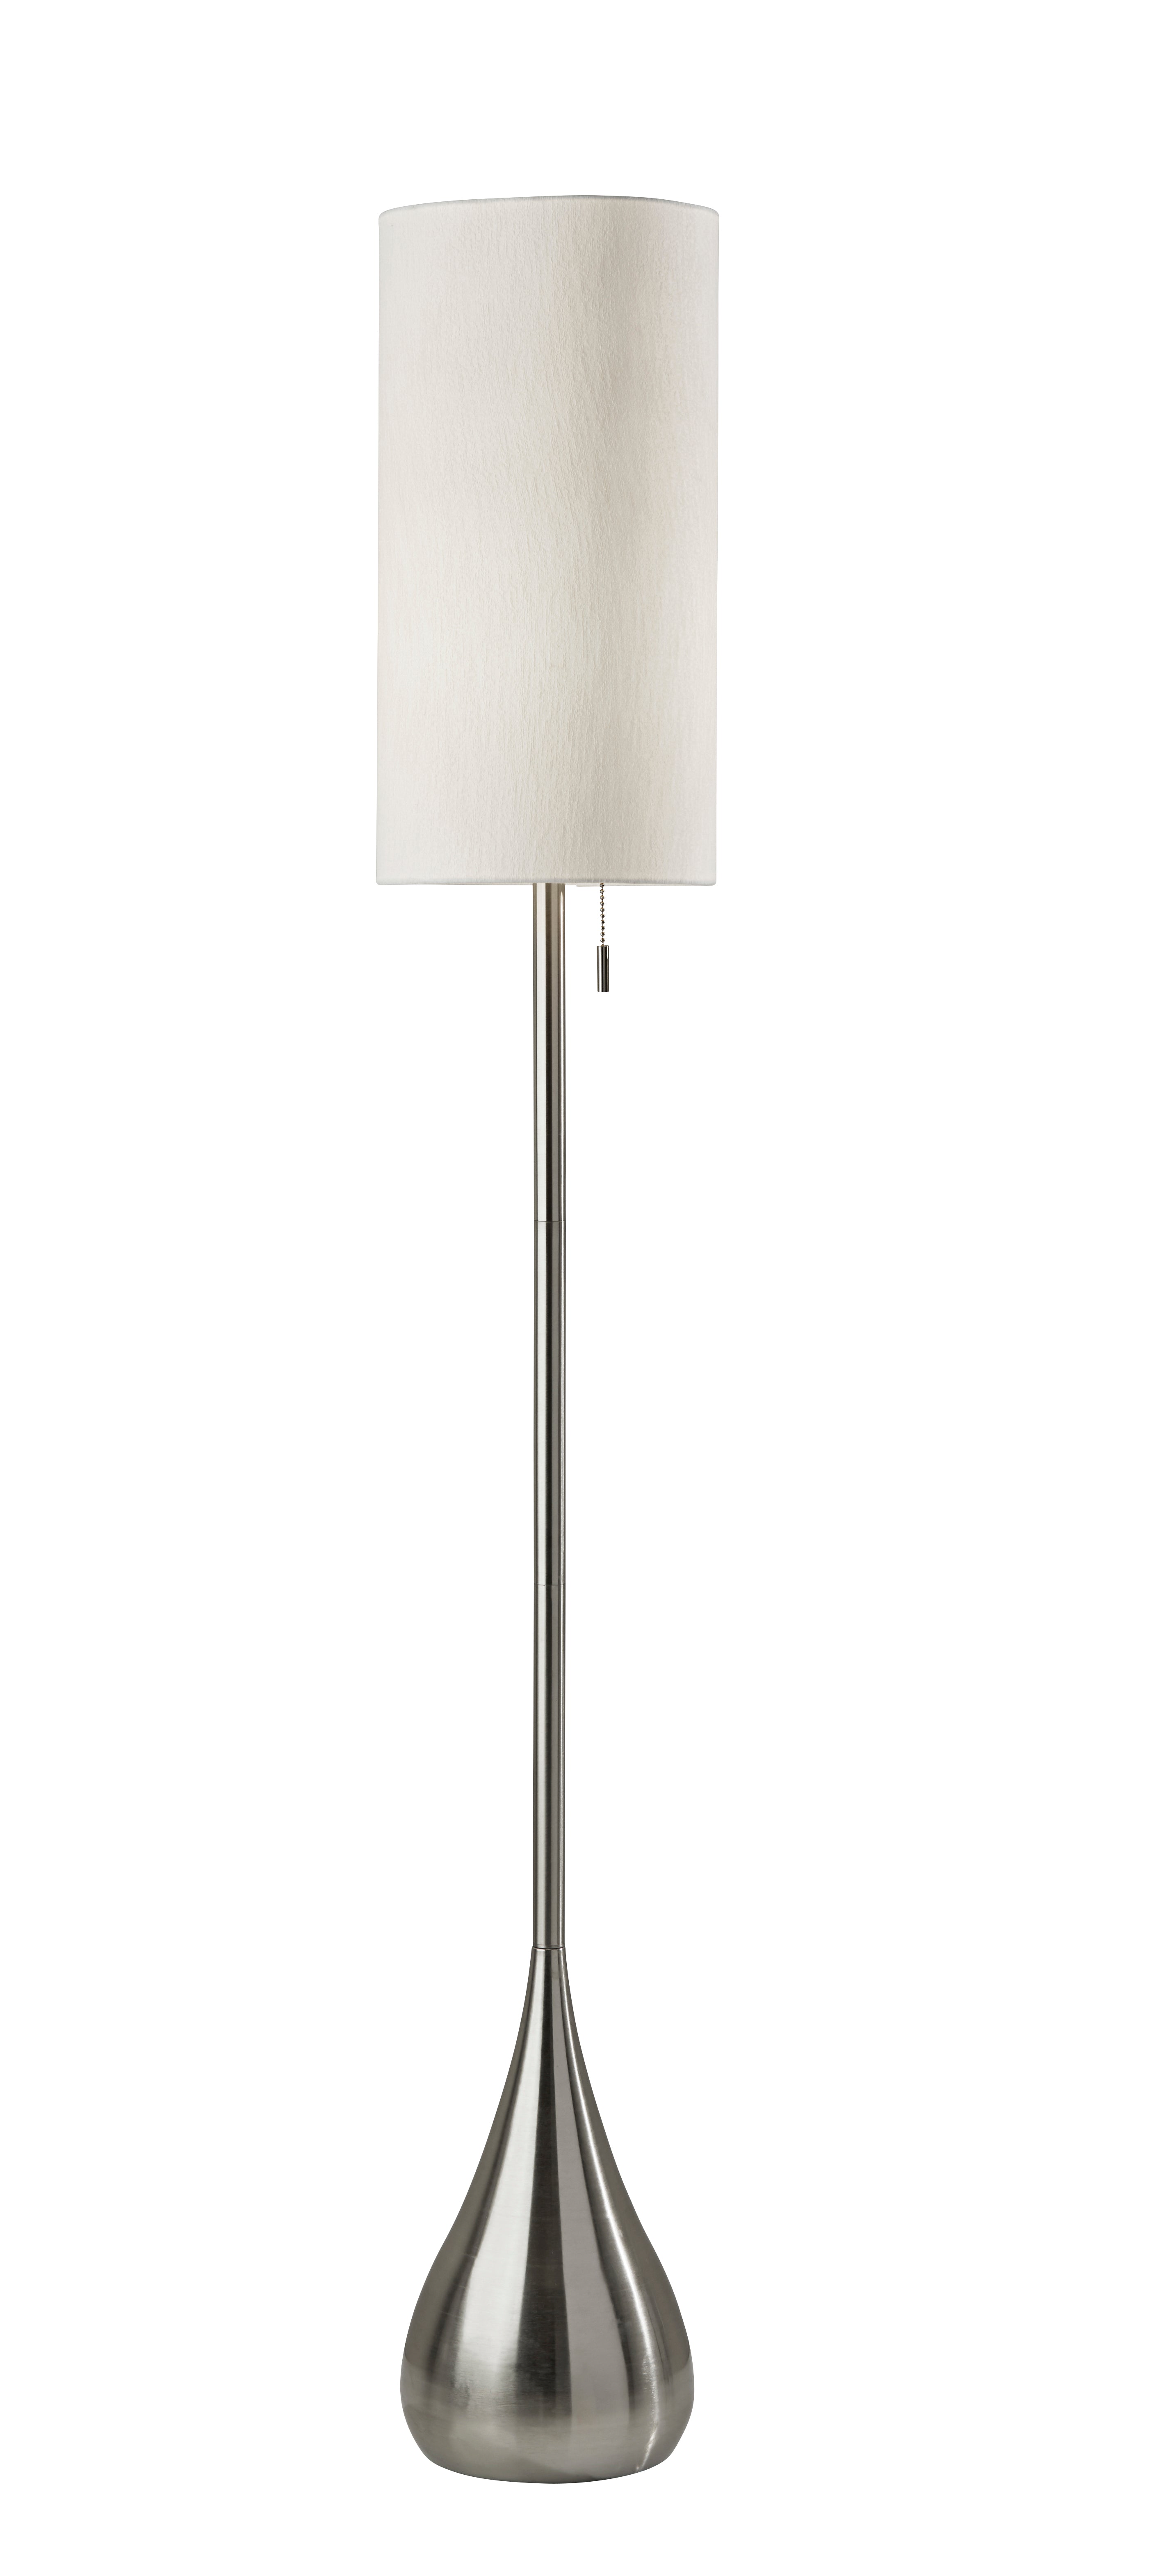 CHRISTINA Floor lamp Stainless steel - 1537-22 | ADESSO